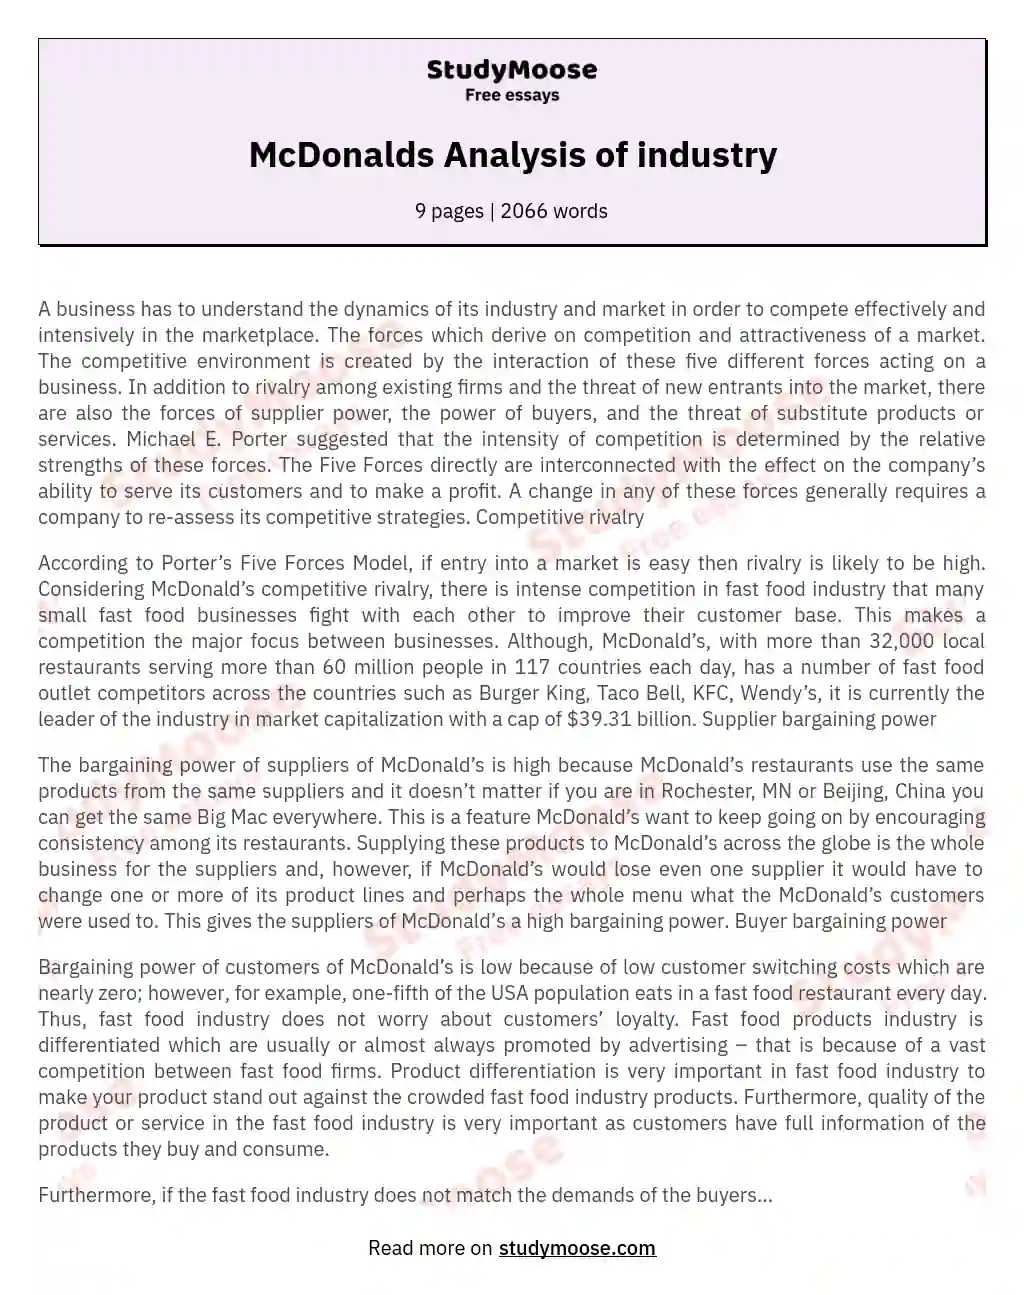 McDonalds Analysis of industry essay